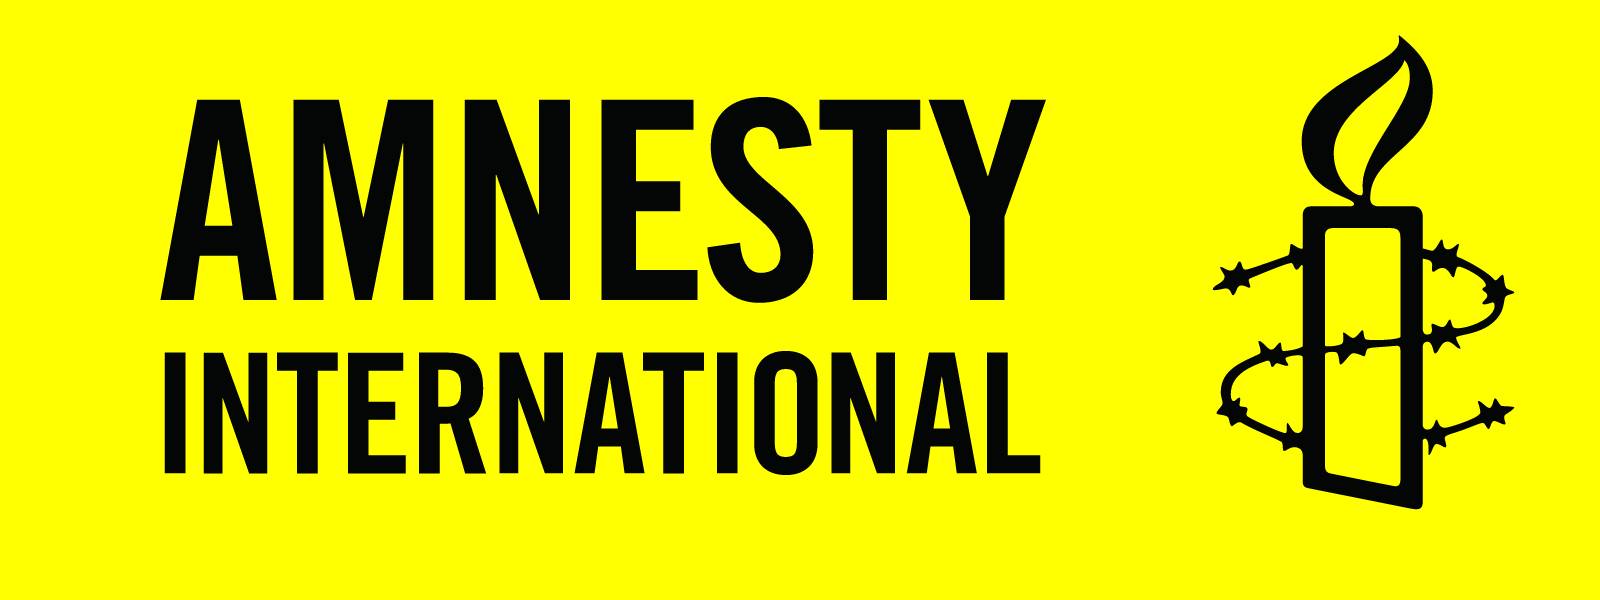 Amnesty International raises alarm bells over proposed Anti-Terrorism bill